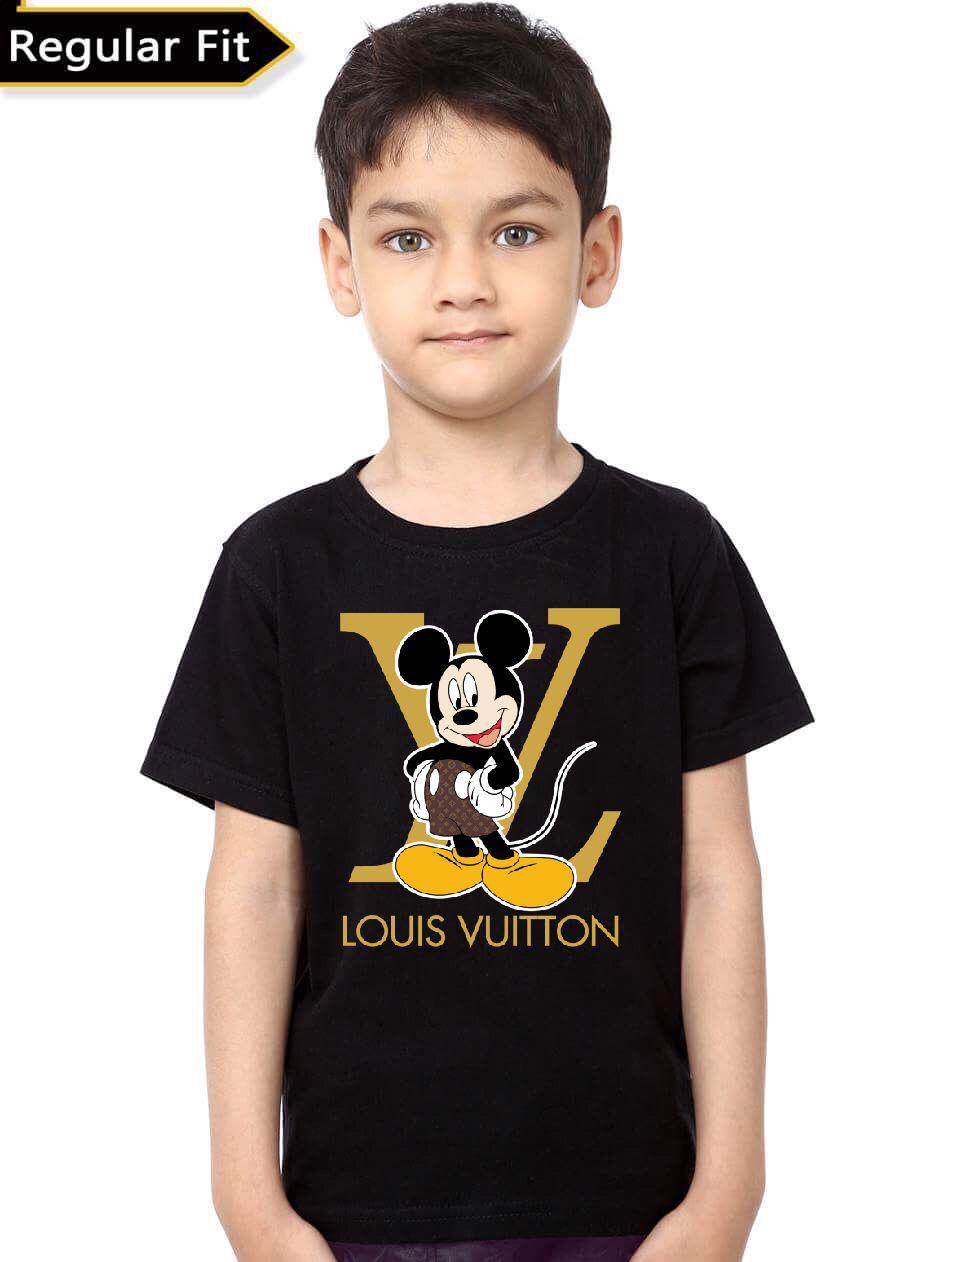 LOUIS VUITTON T-SHIRT FOR BOYS 